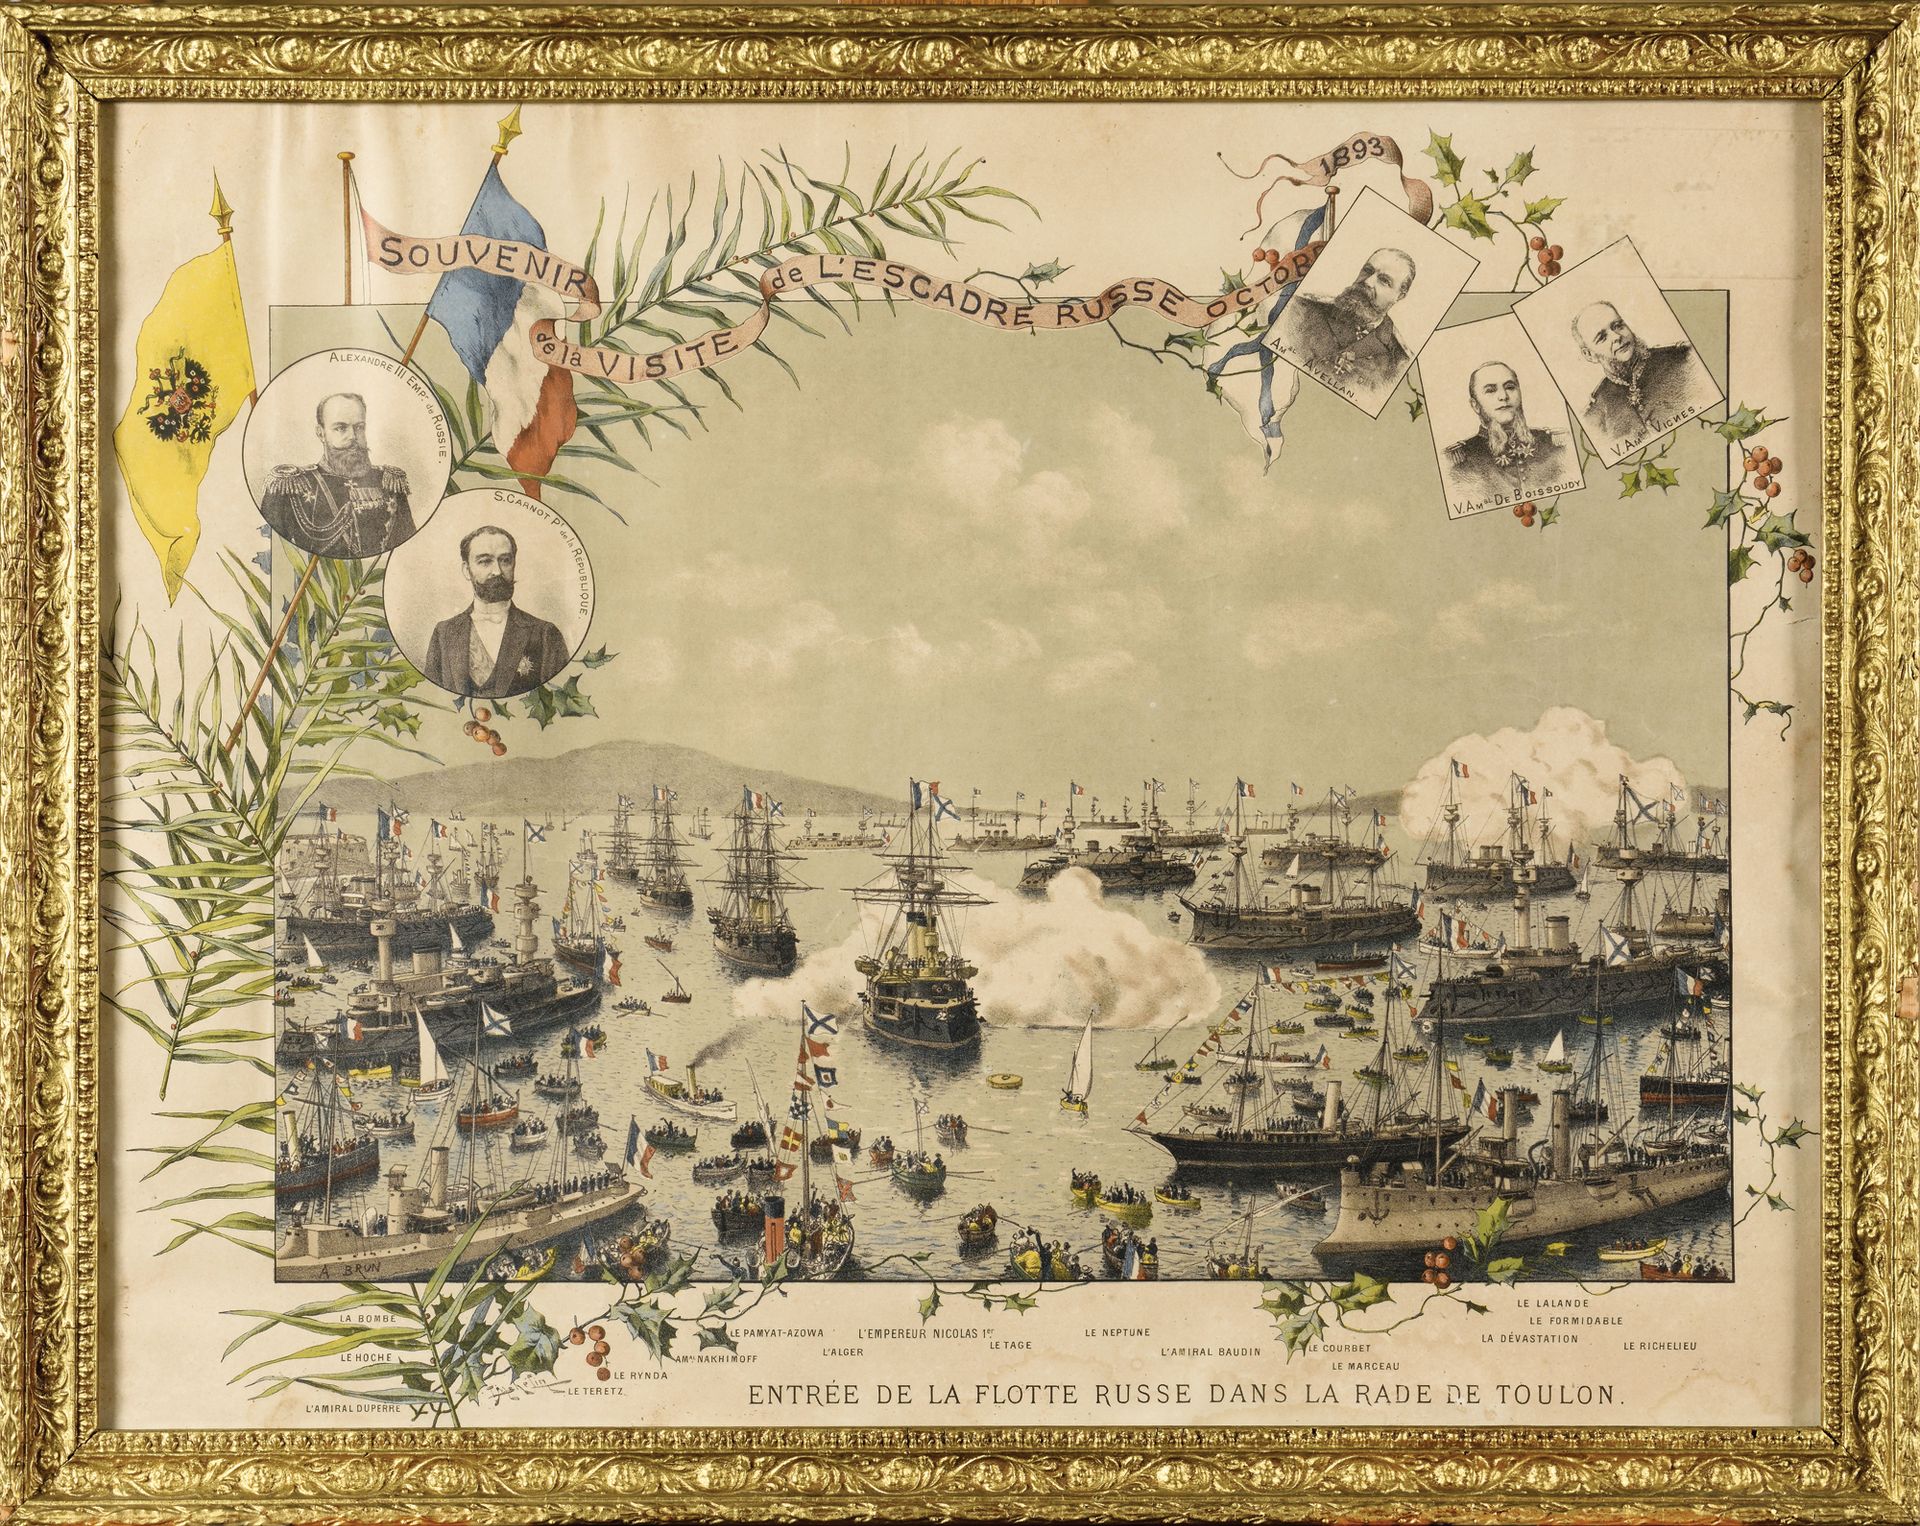 Null SOUVENIR DE LA VISITE DE L’ESCADRE RUSSE EN OCTOBRE 1893

Entrée de la flot&hellip;